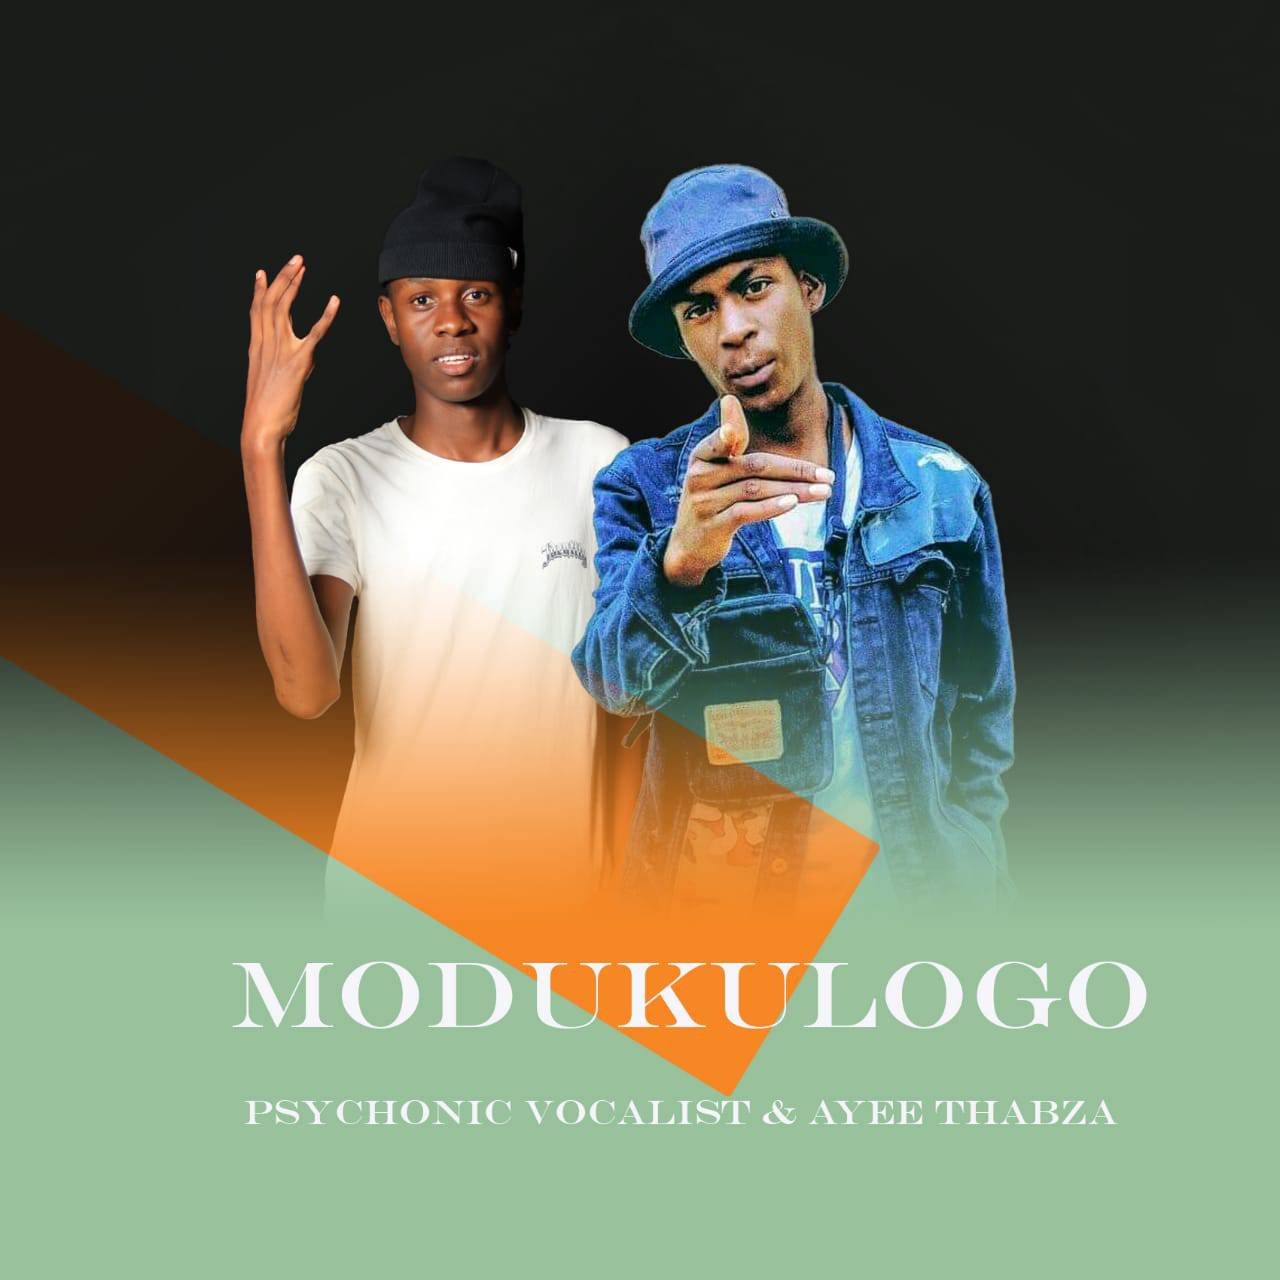 Modukologo - Ayee Thabza & Psychonic Vocalist@Bolomp3.com